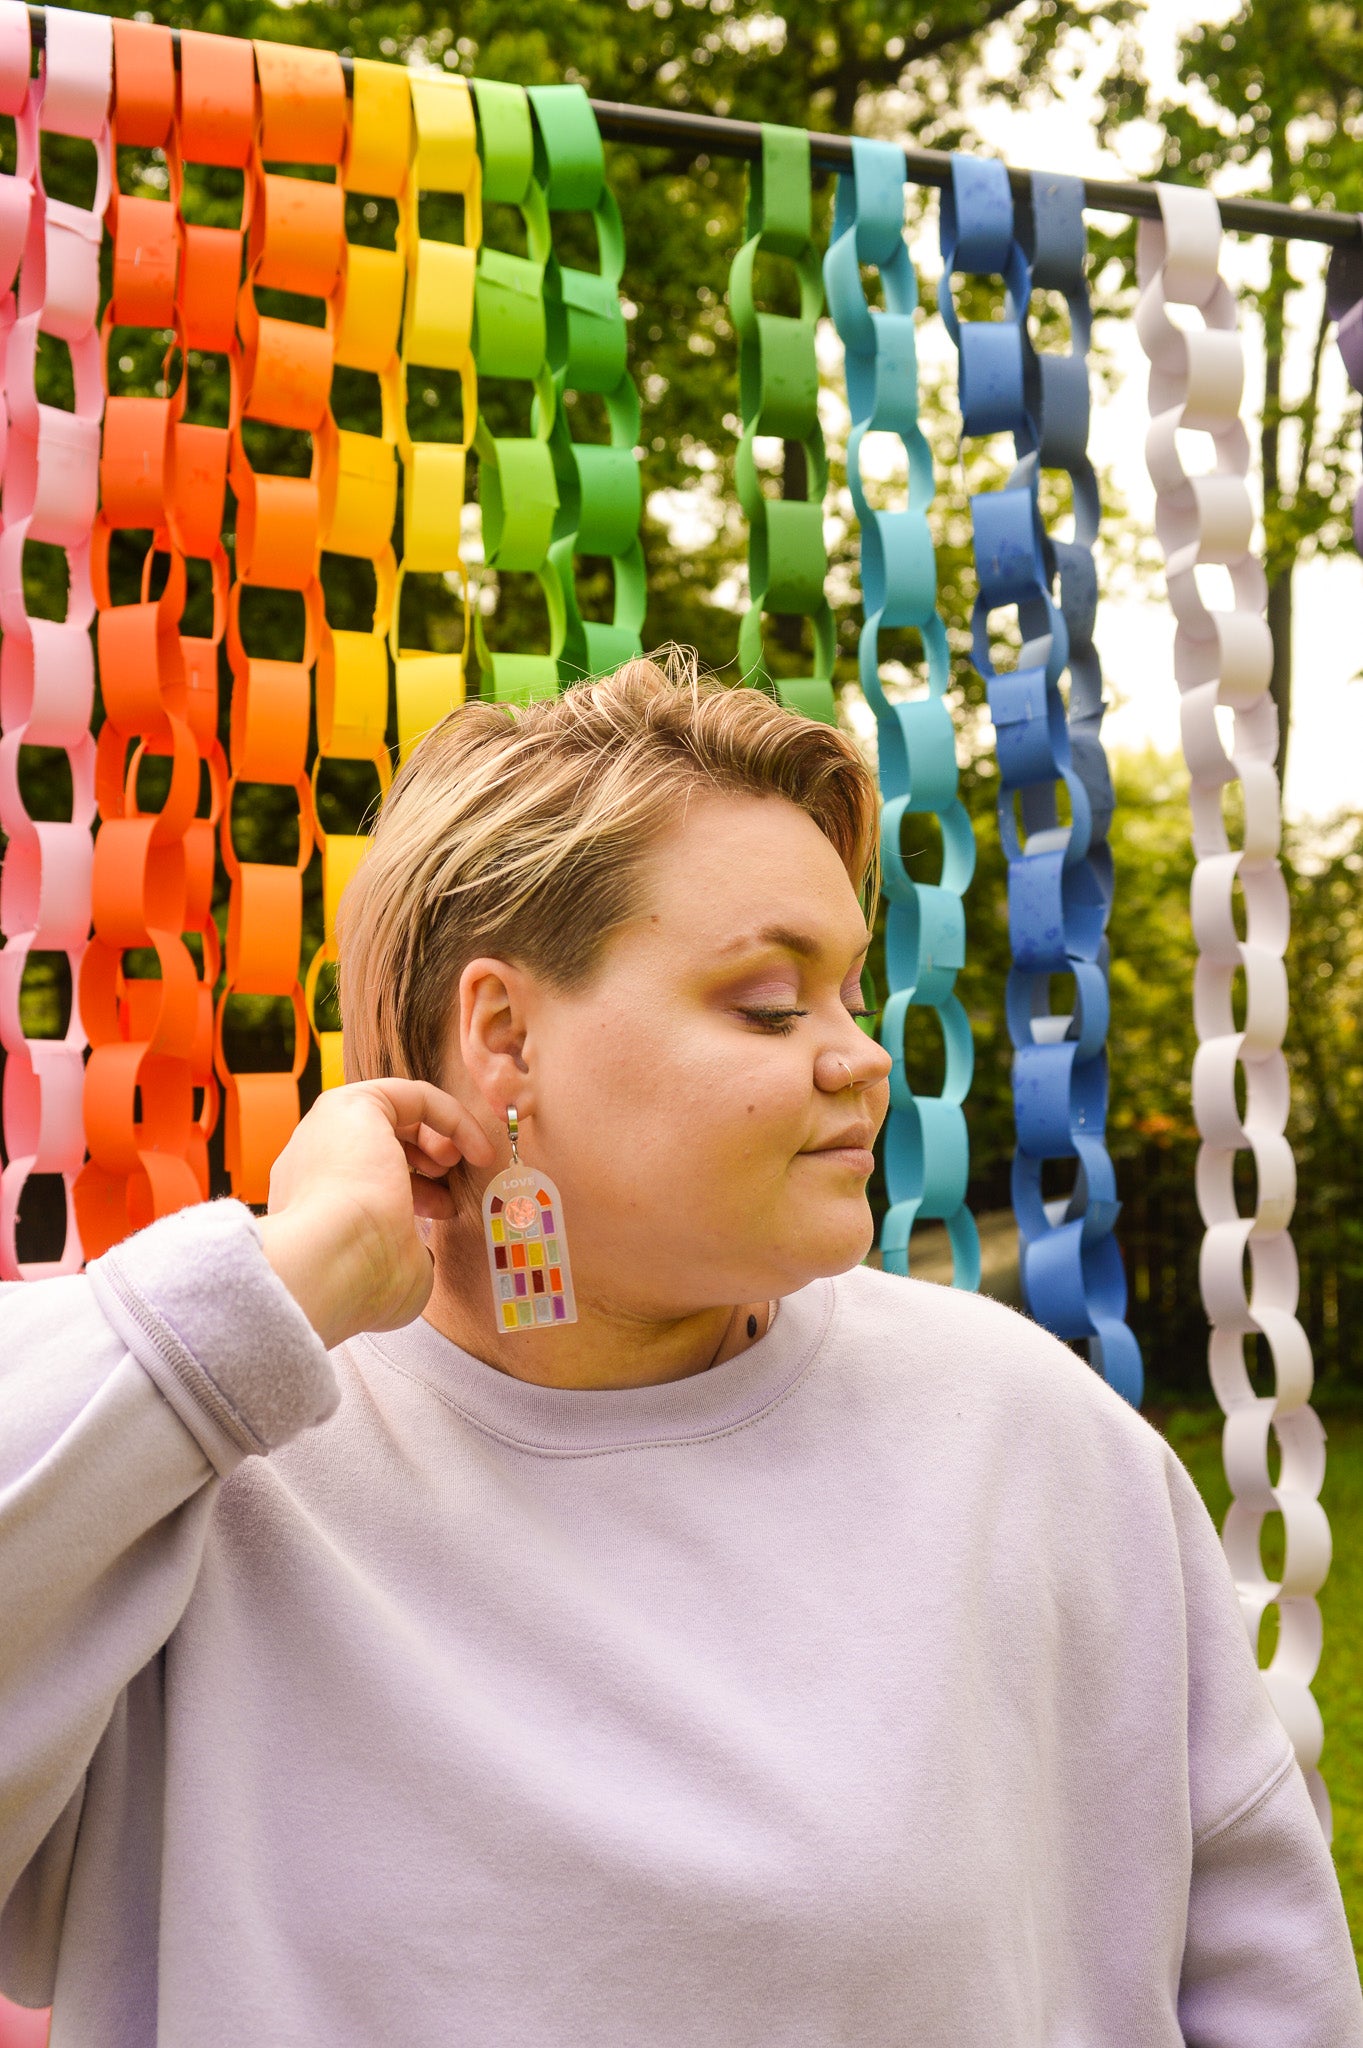 Window To Your Soul Rainbow Earrings